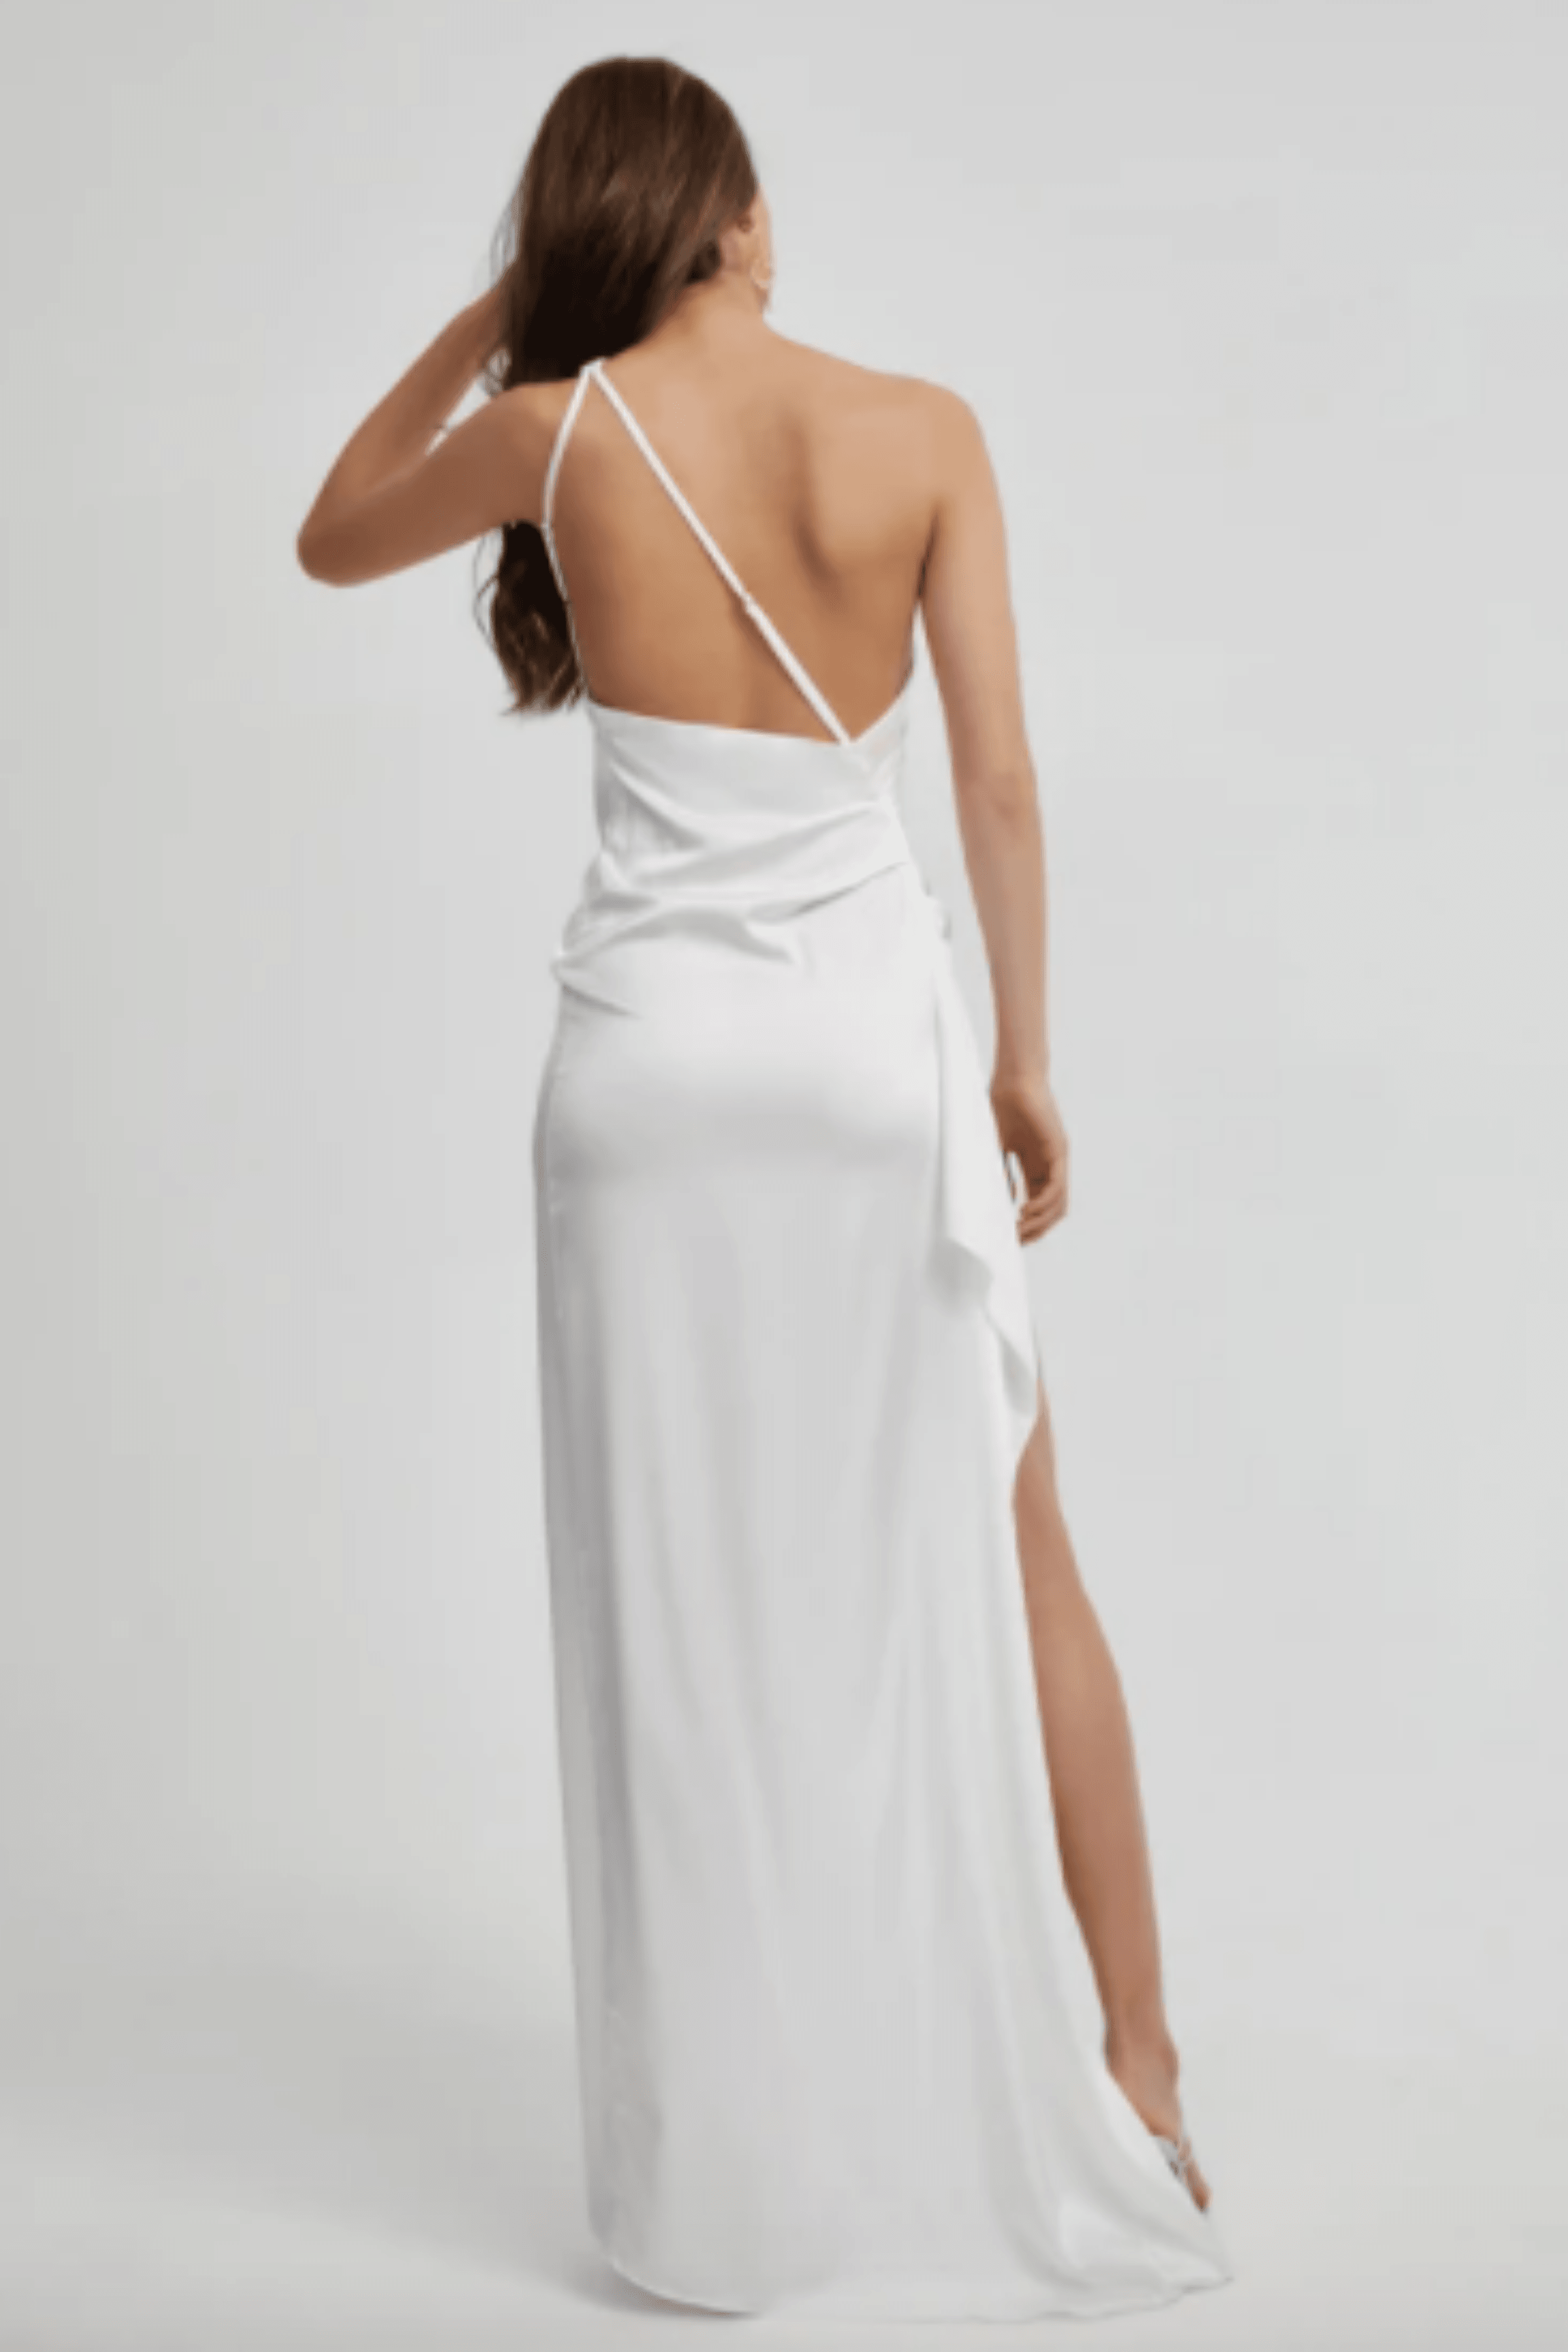 Lexi LEXI Samira Dress (White) - RRP $379 - lexi-samira-dress-white---rrp-9-dress-for-a-night-30754901.png